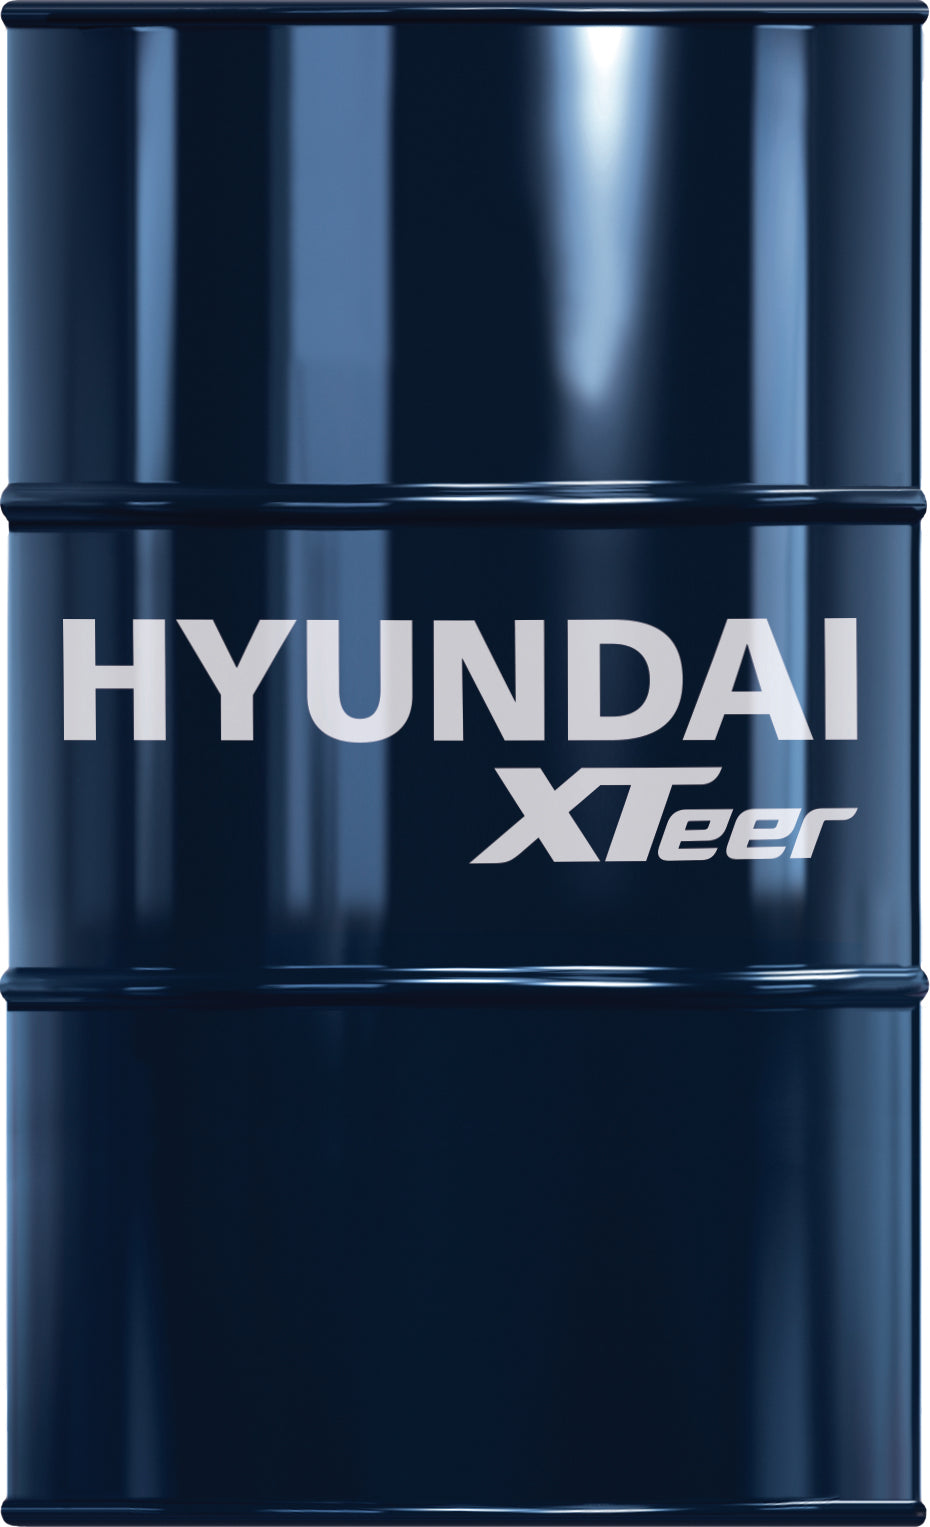 HYUNDAI XTeer ENGINE OIL HD3000 15W40 1L / 6L / 200L FOR DIESEL, 1011026 1061026 1201026